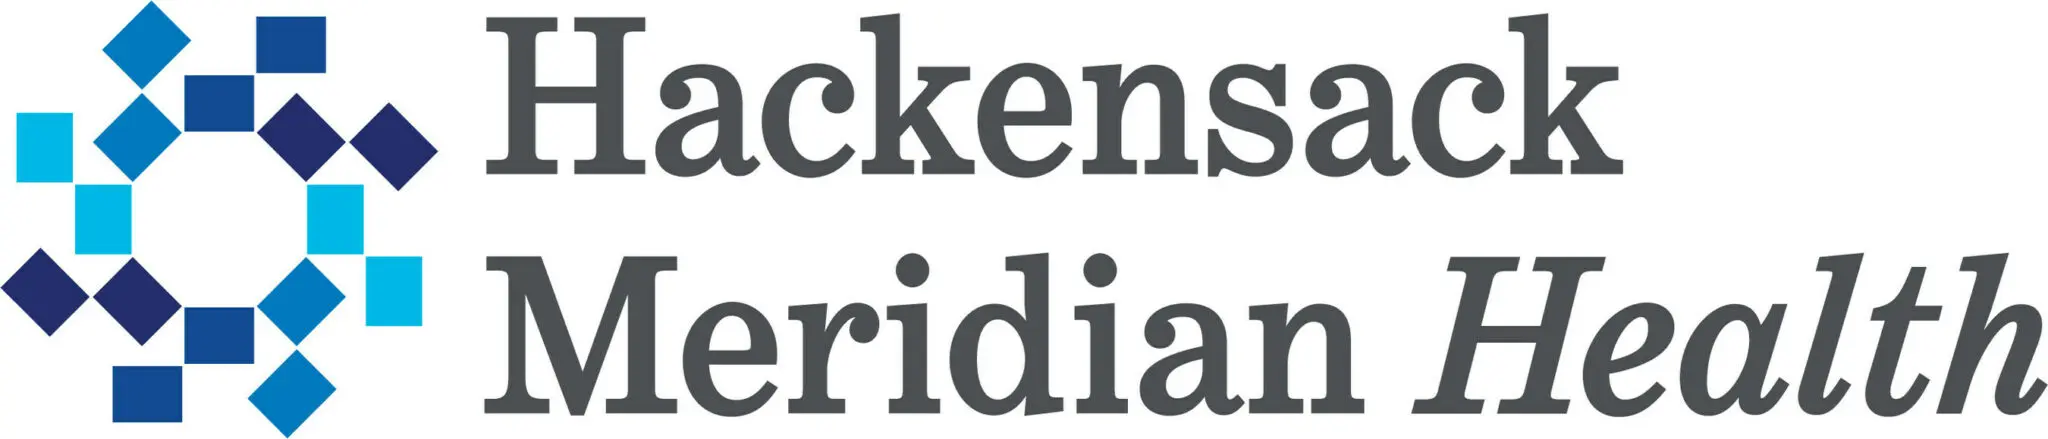 Hackensack-Meridian-Health-Logo